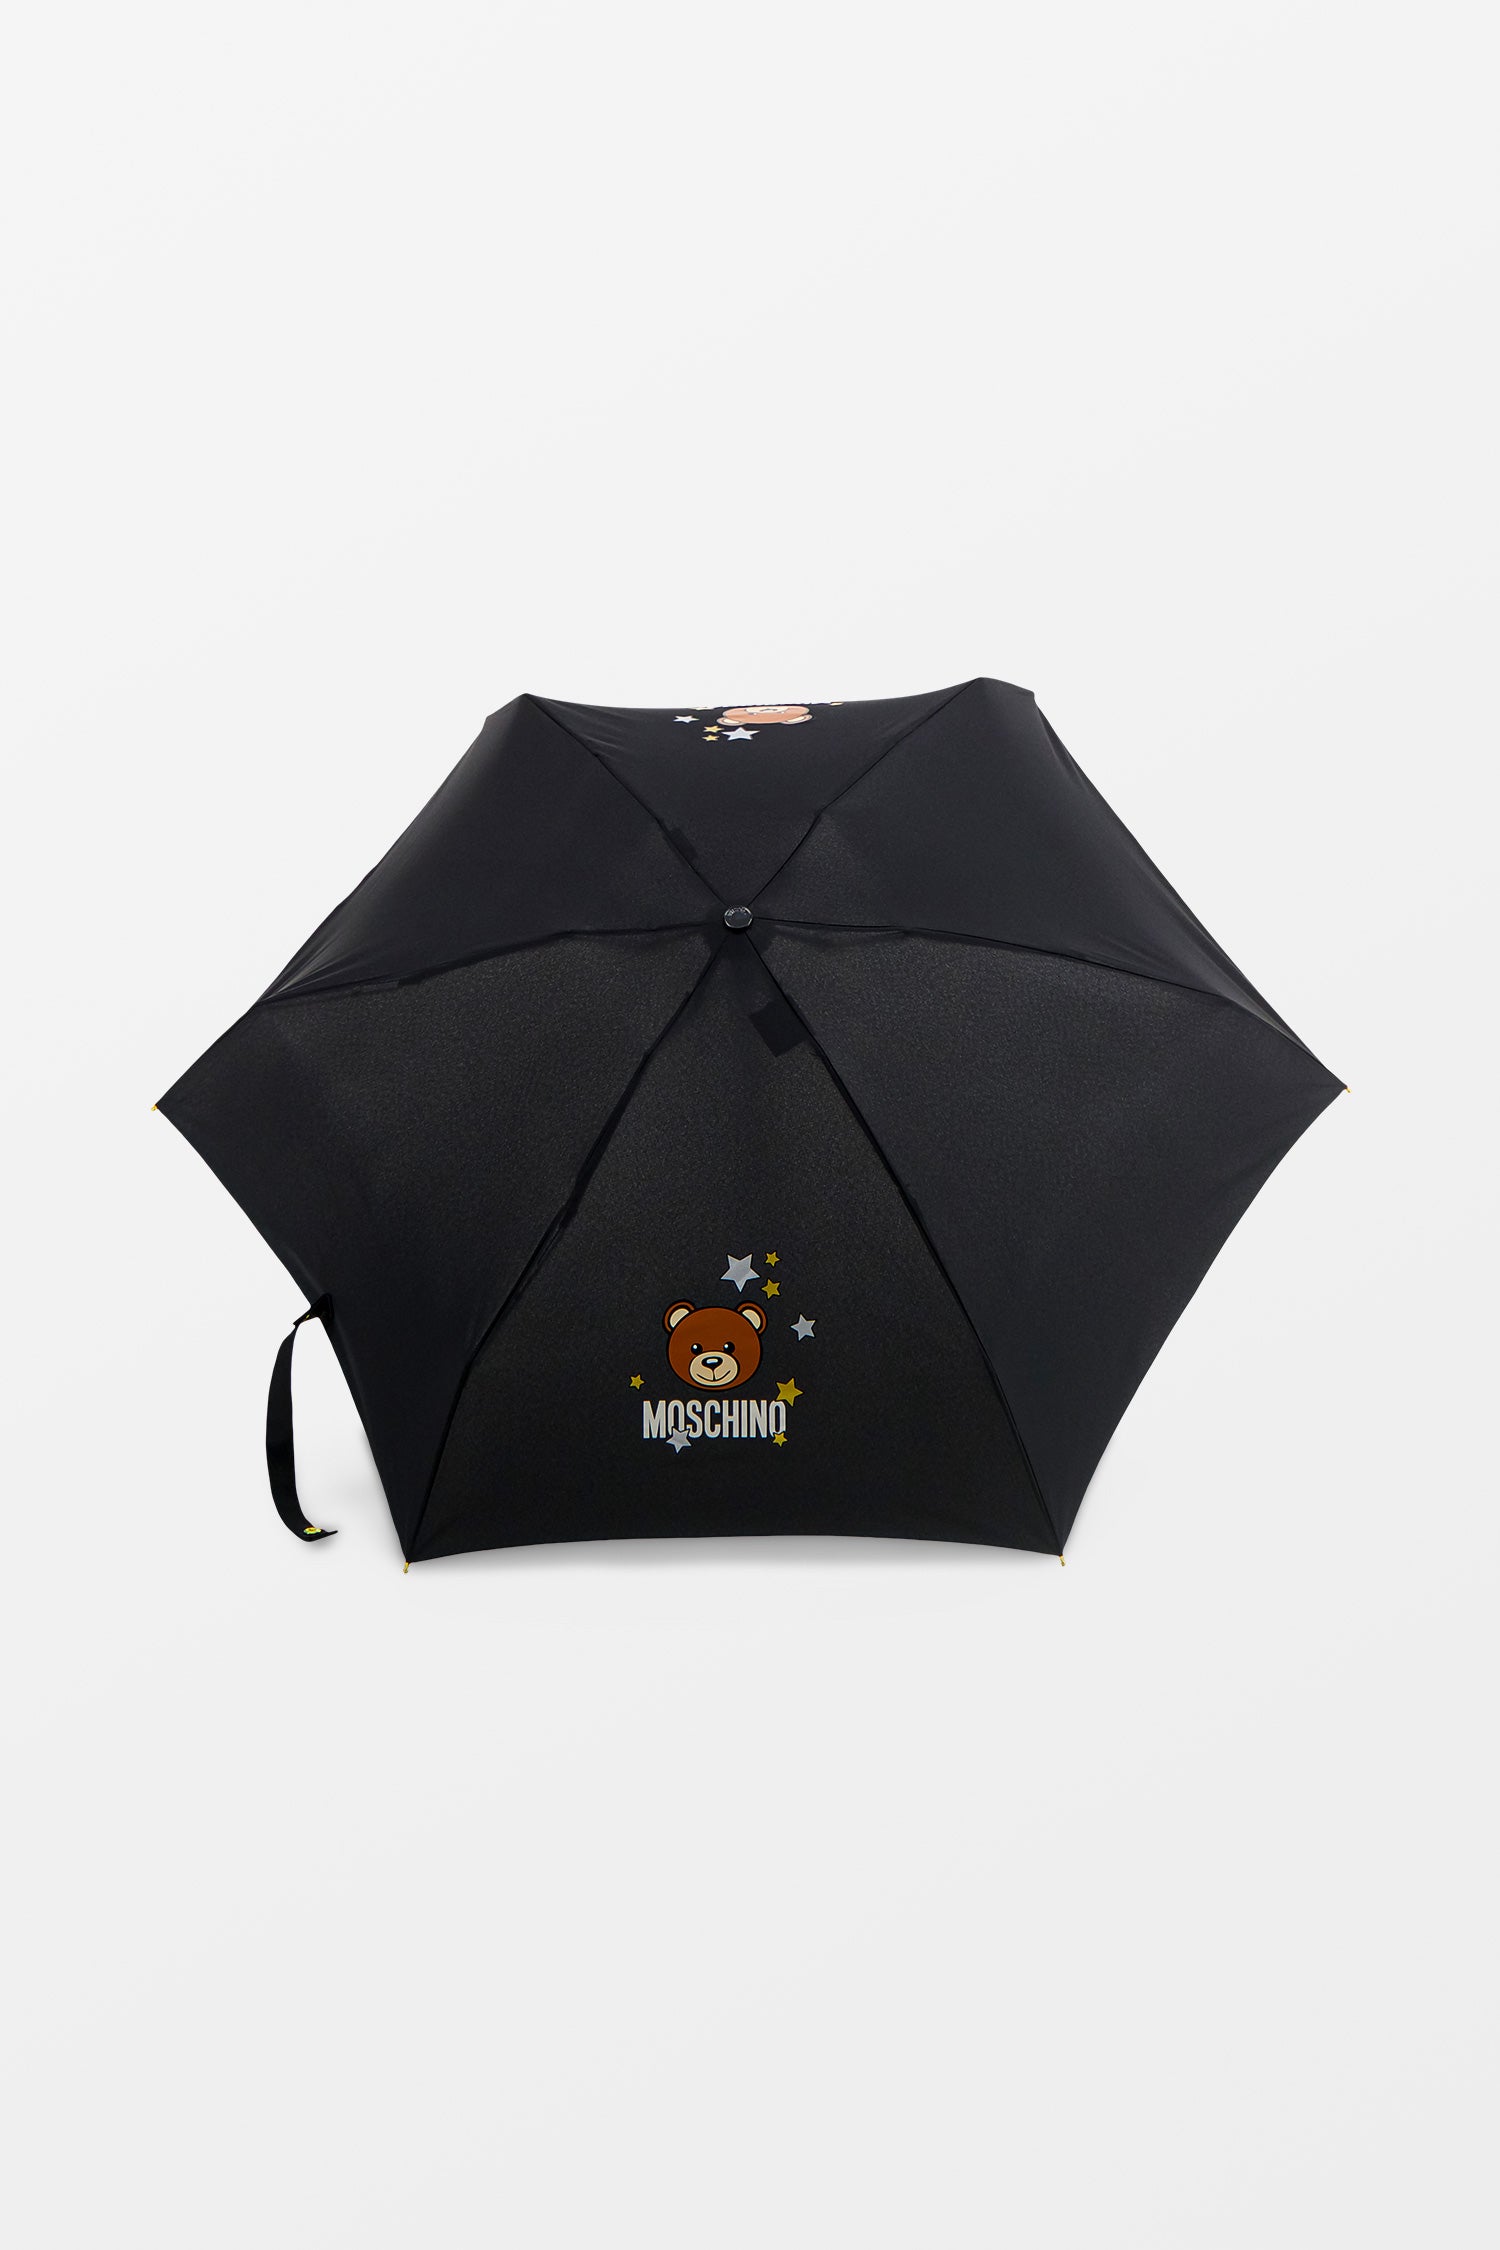 Moschino Toy Stars Compact Black Umbrella